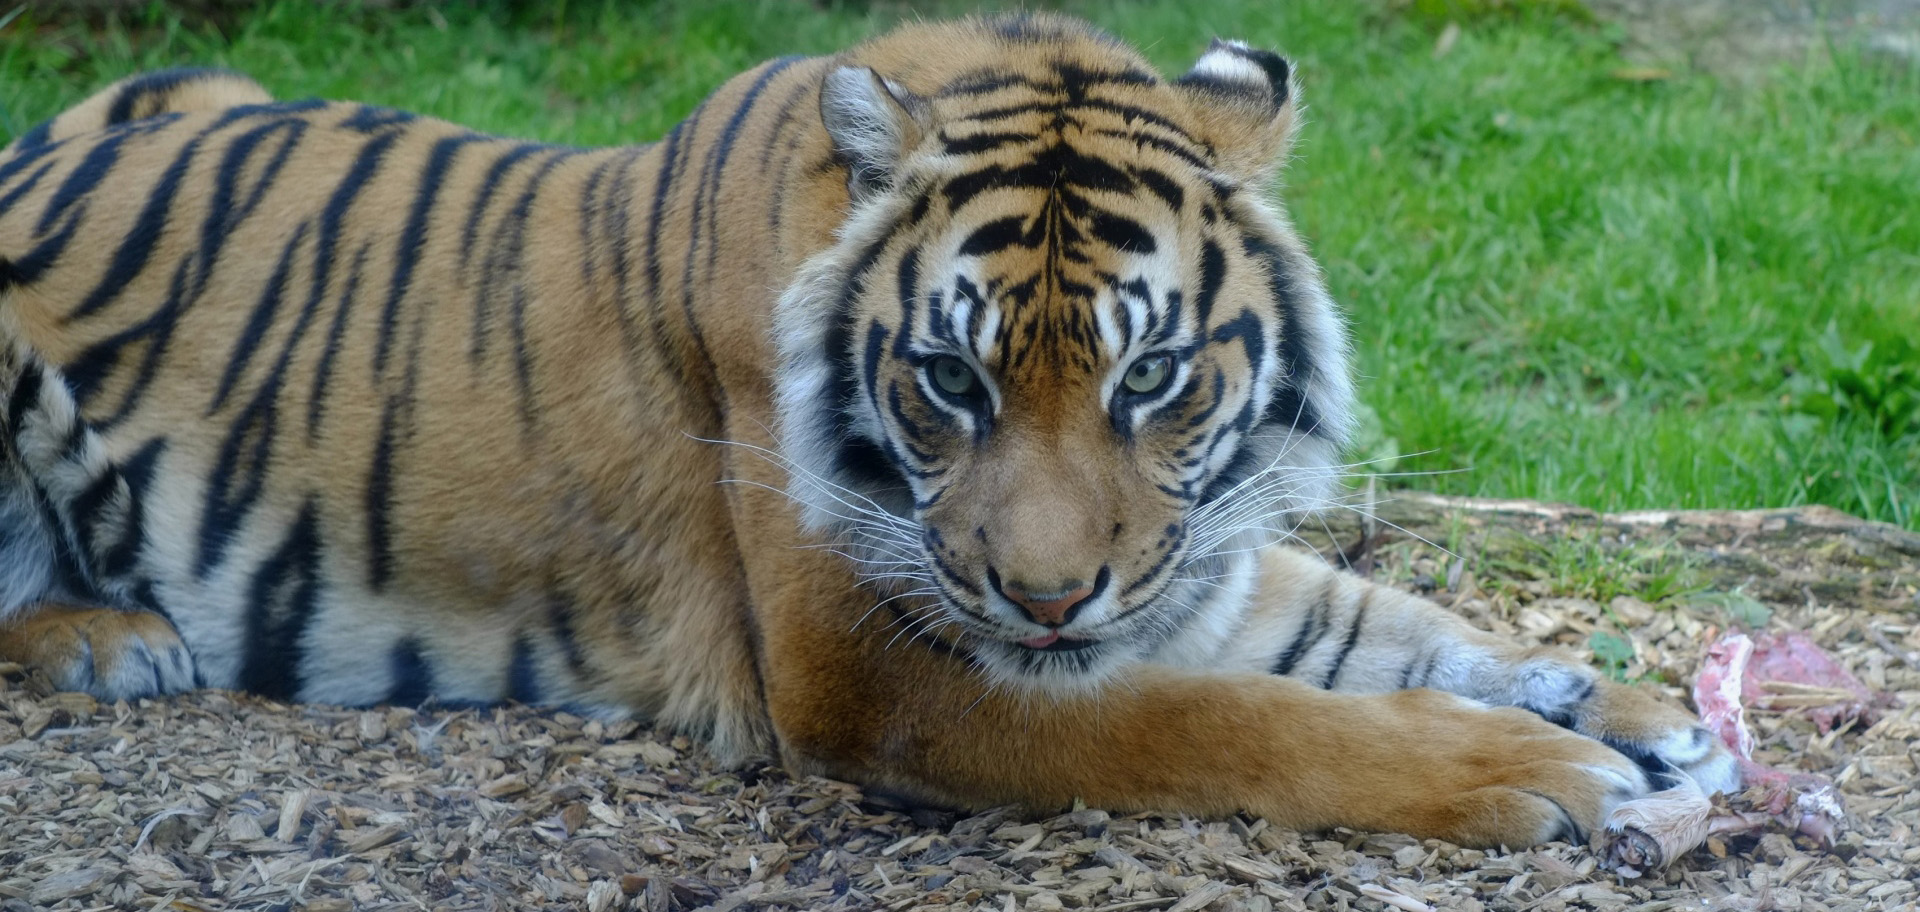 A Sumatran tiger chewing a bone